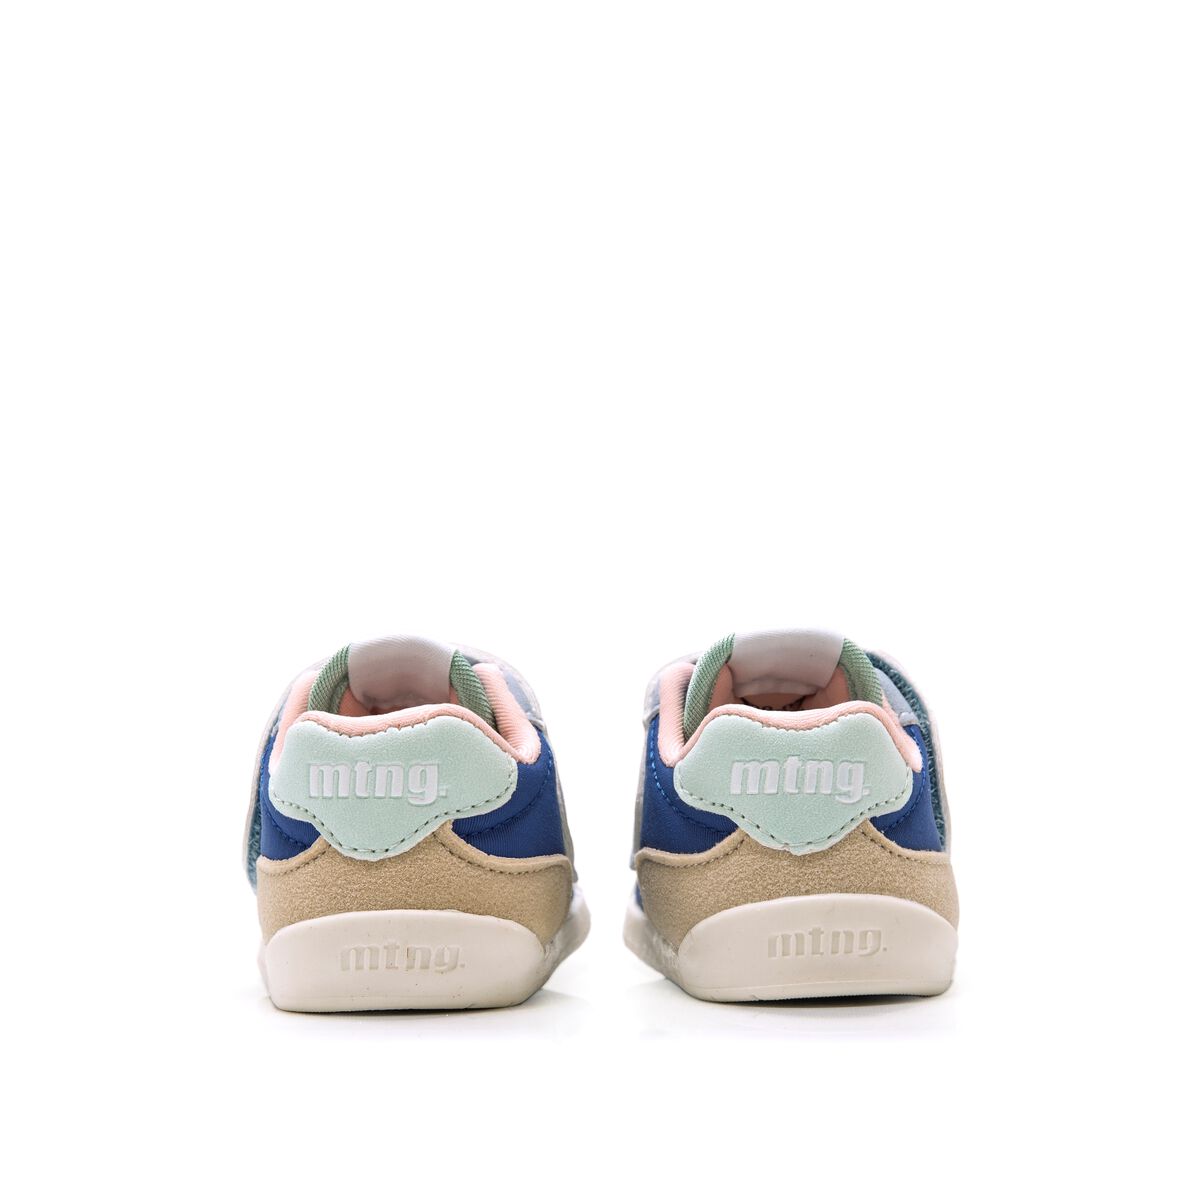 Sneakers de Rapariga modelo FREE BABY de MTNG image number 3